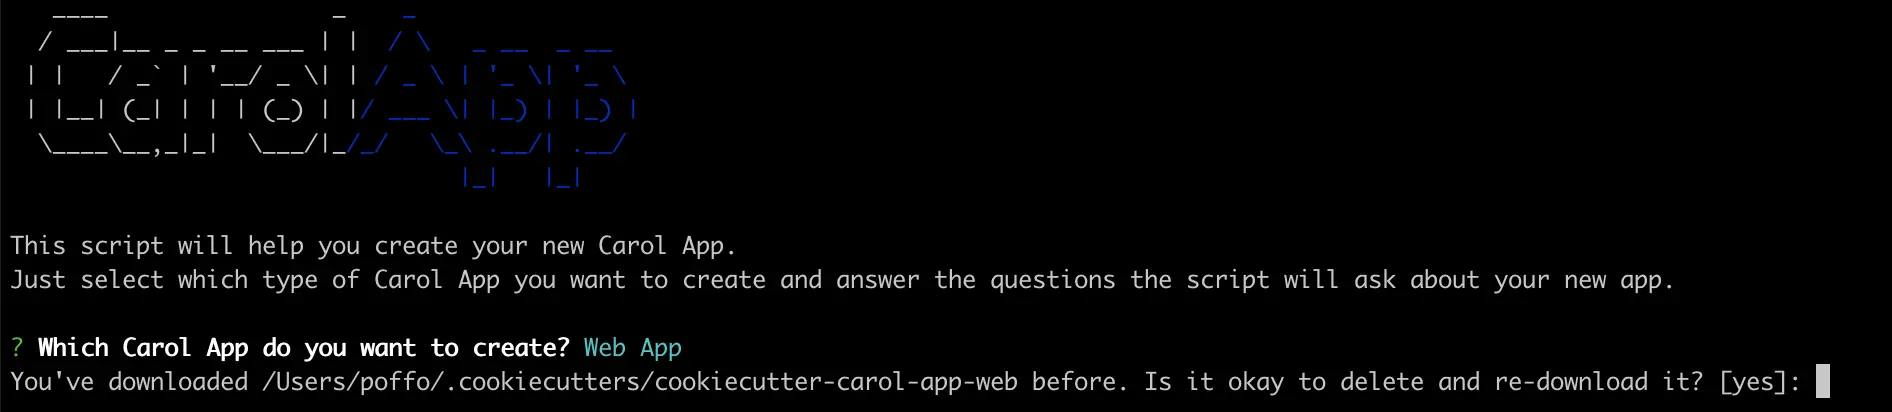 Carol App Web Step 1